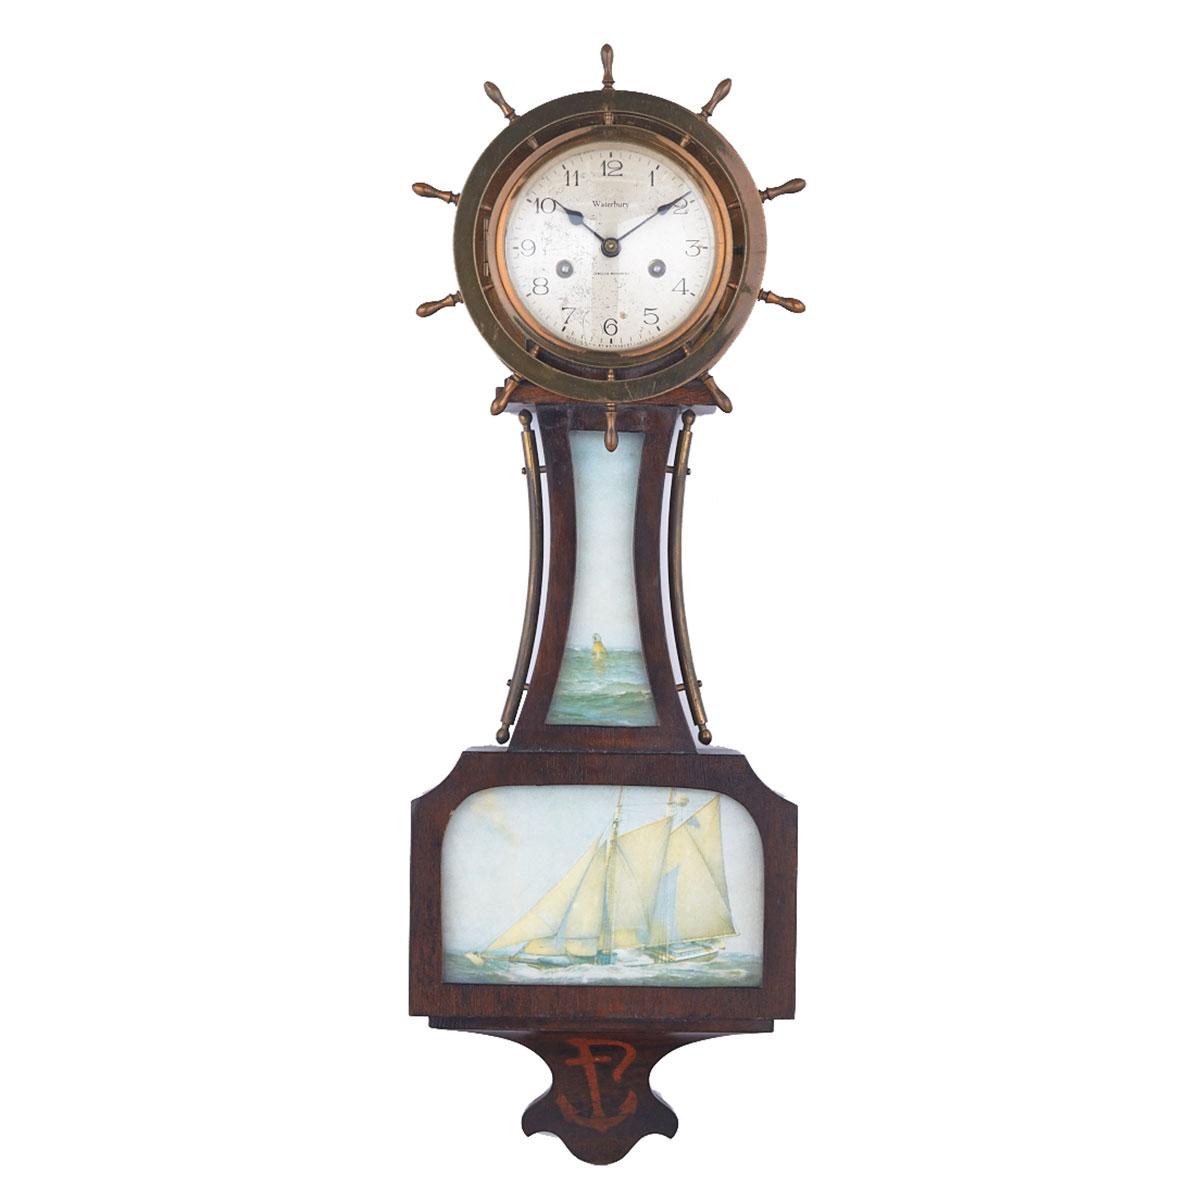 Waterbury Ship’s Bell No. 10  “Banjo” Clock, c.1920